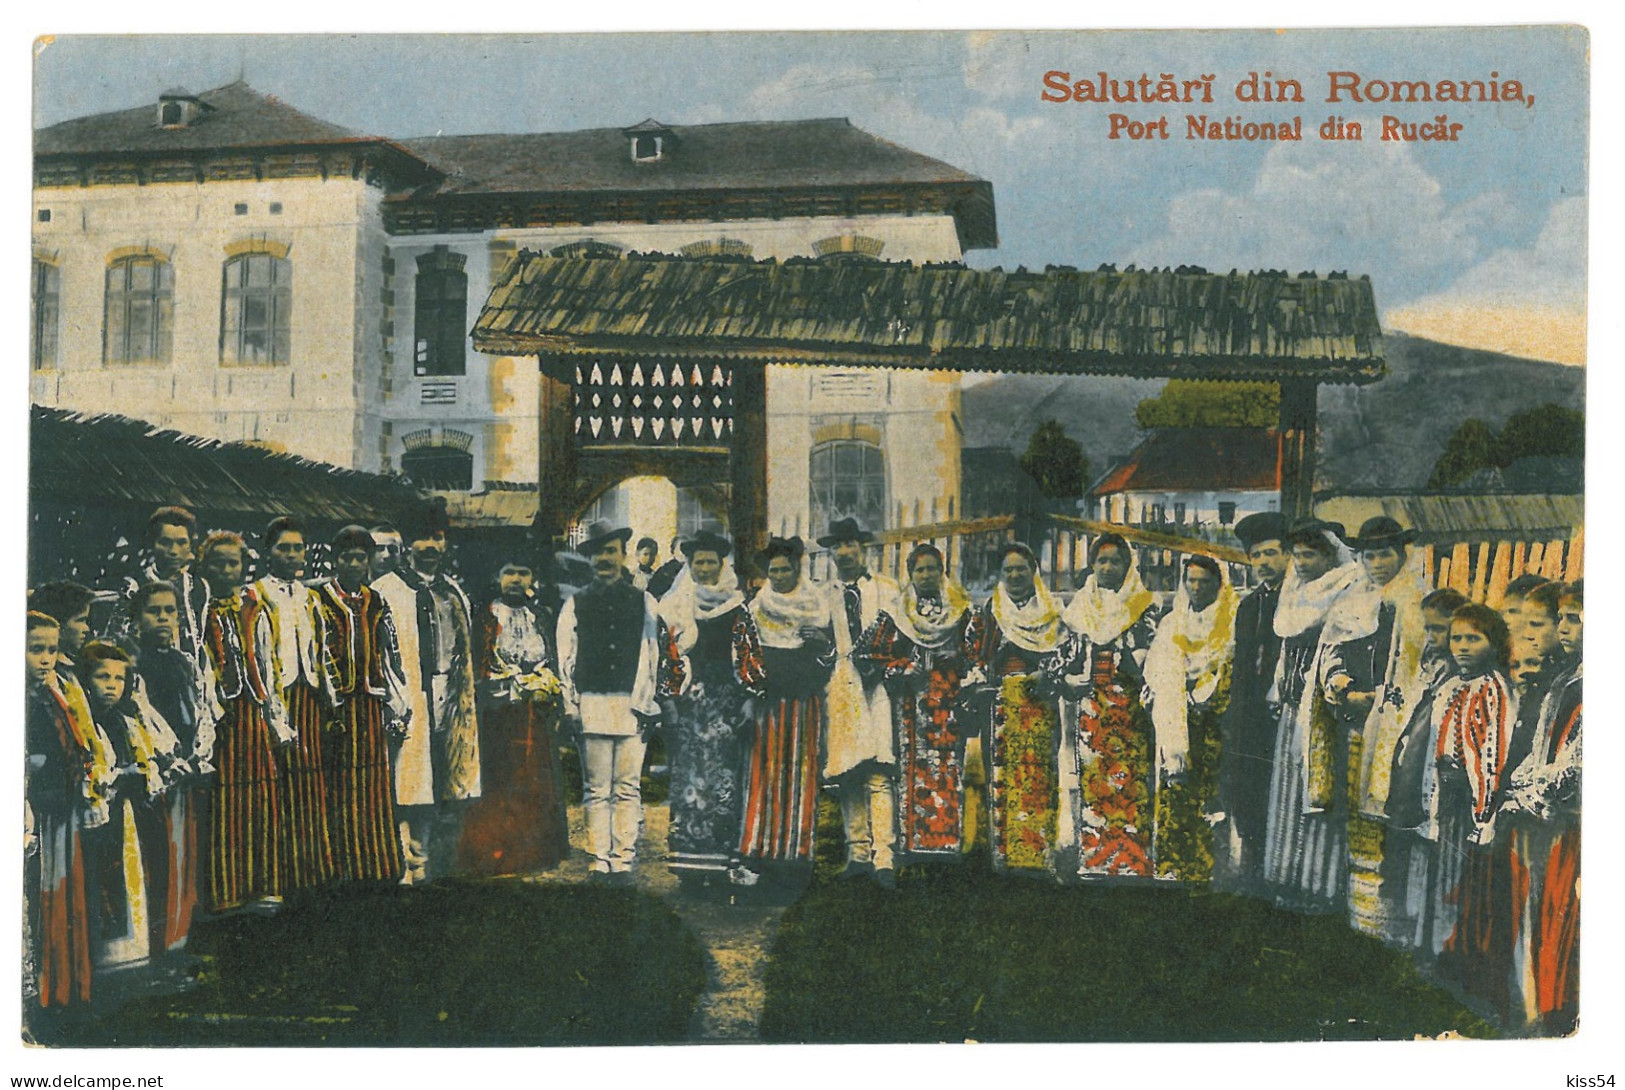 RO 45 - 22643 RUCAR, Brasov, ETHNIC, Romania - Old Postcard, CENSOR - Used - 1917 - Romania